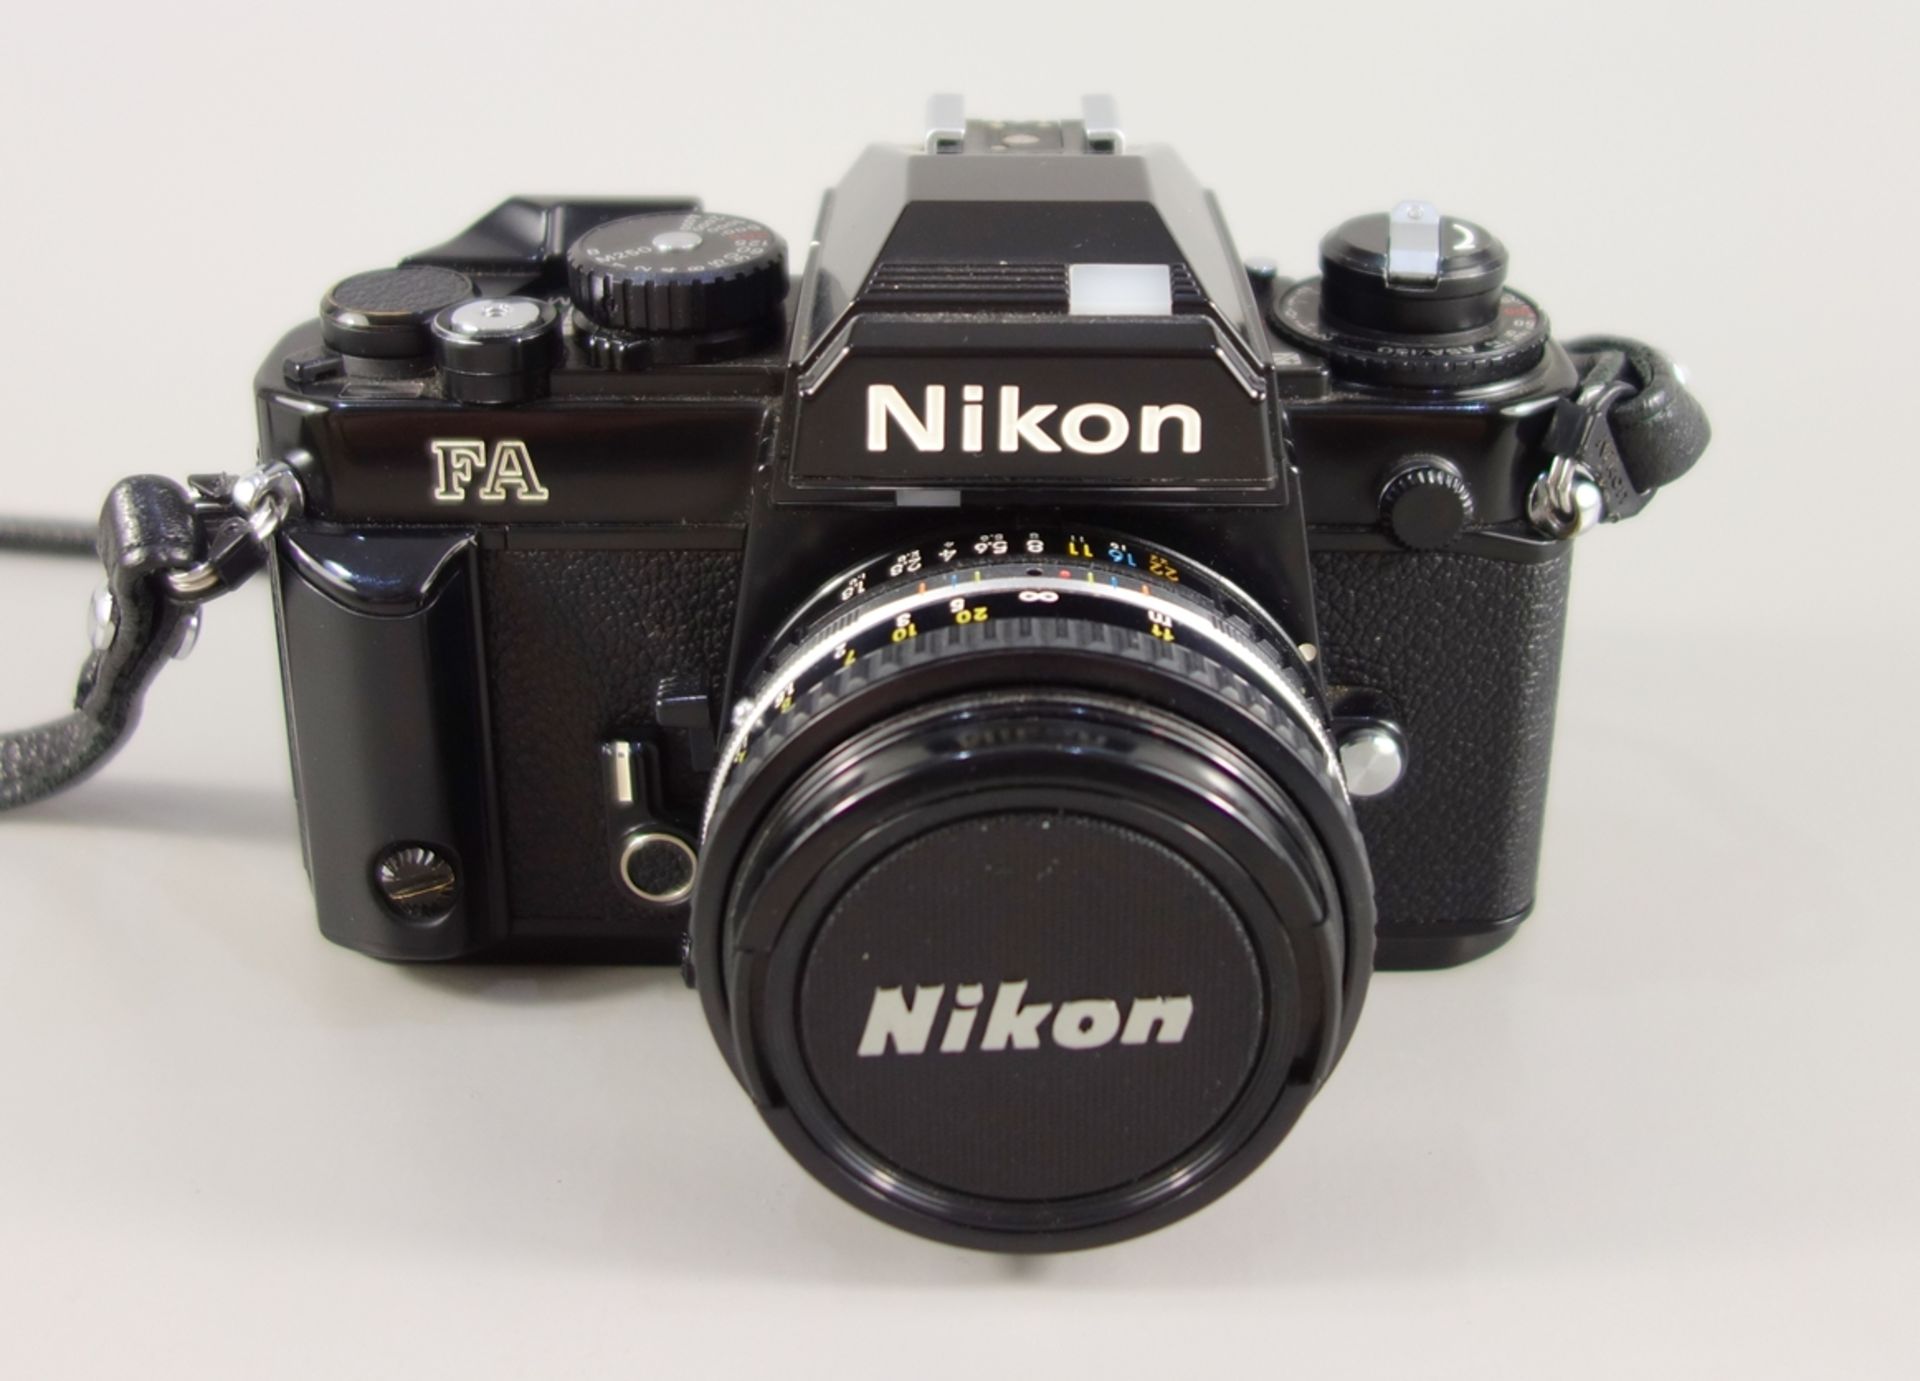 Nikon FA, Spiegelreflexkamera, schwarz, Serien-Nr. 5162031, mit Objektiv Nikon Lens Series E, 50mm